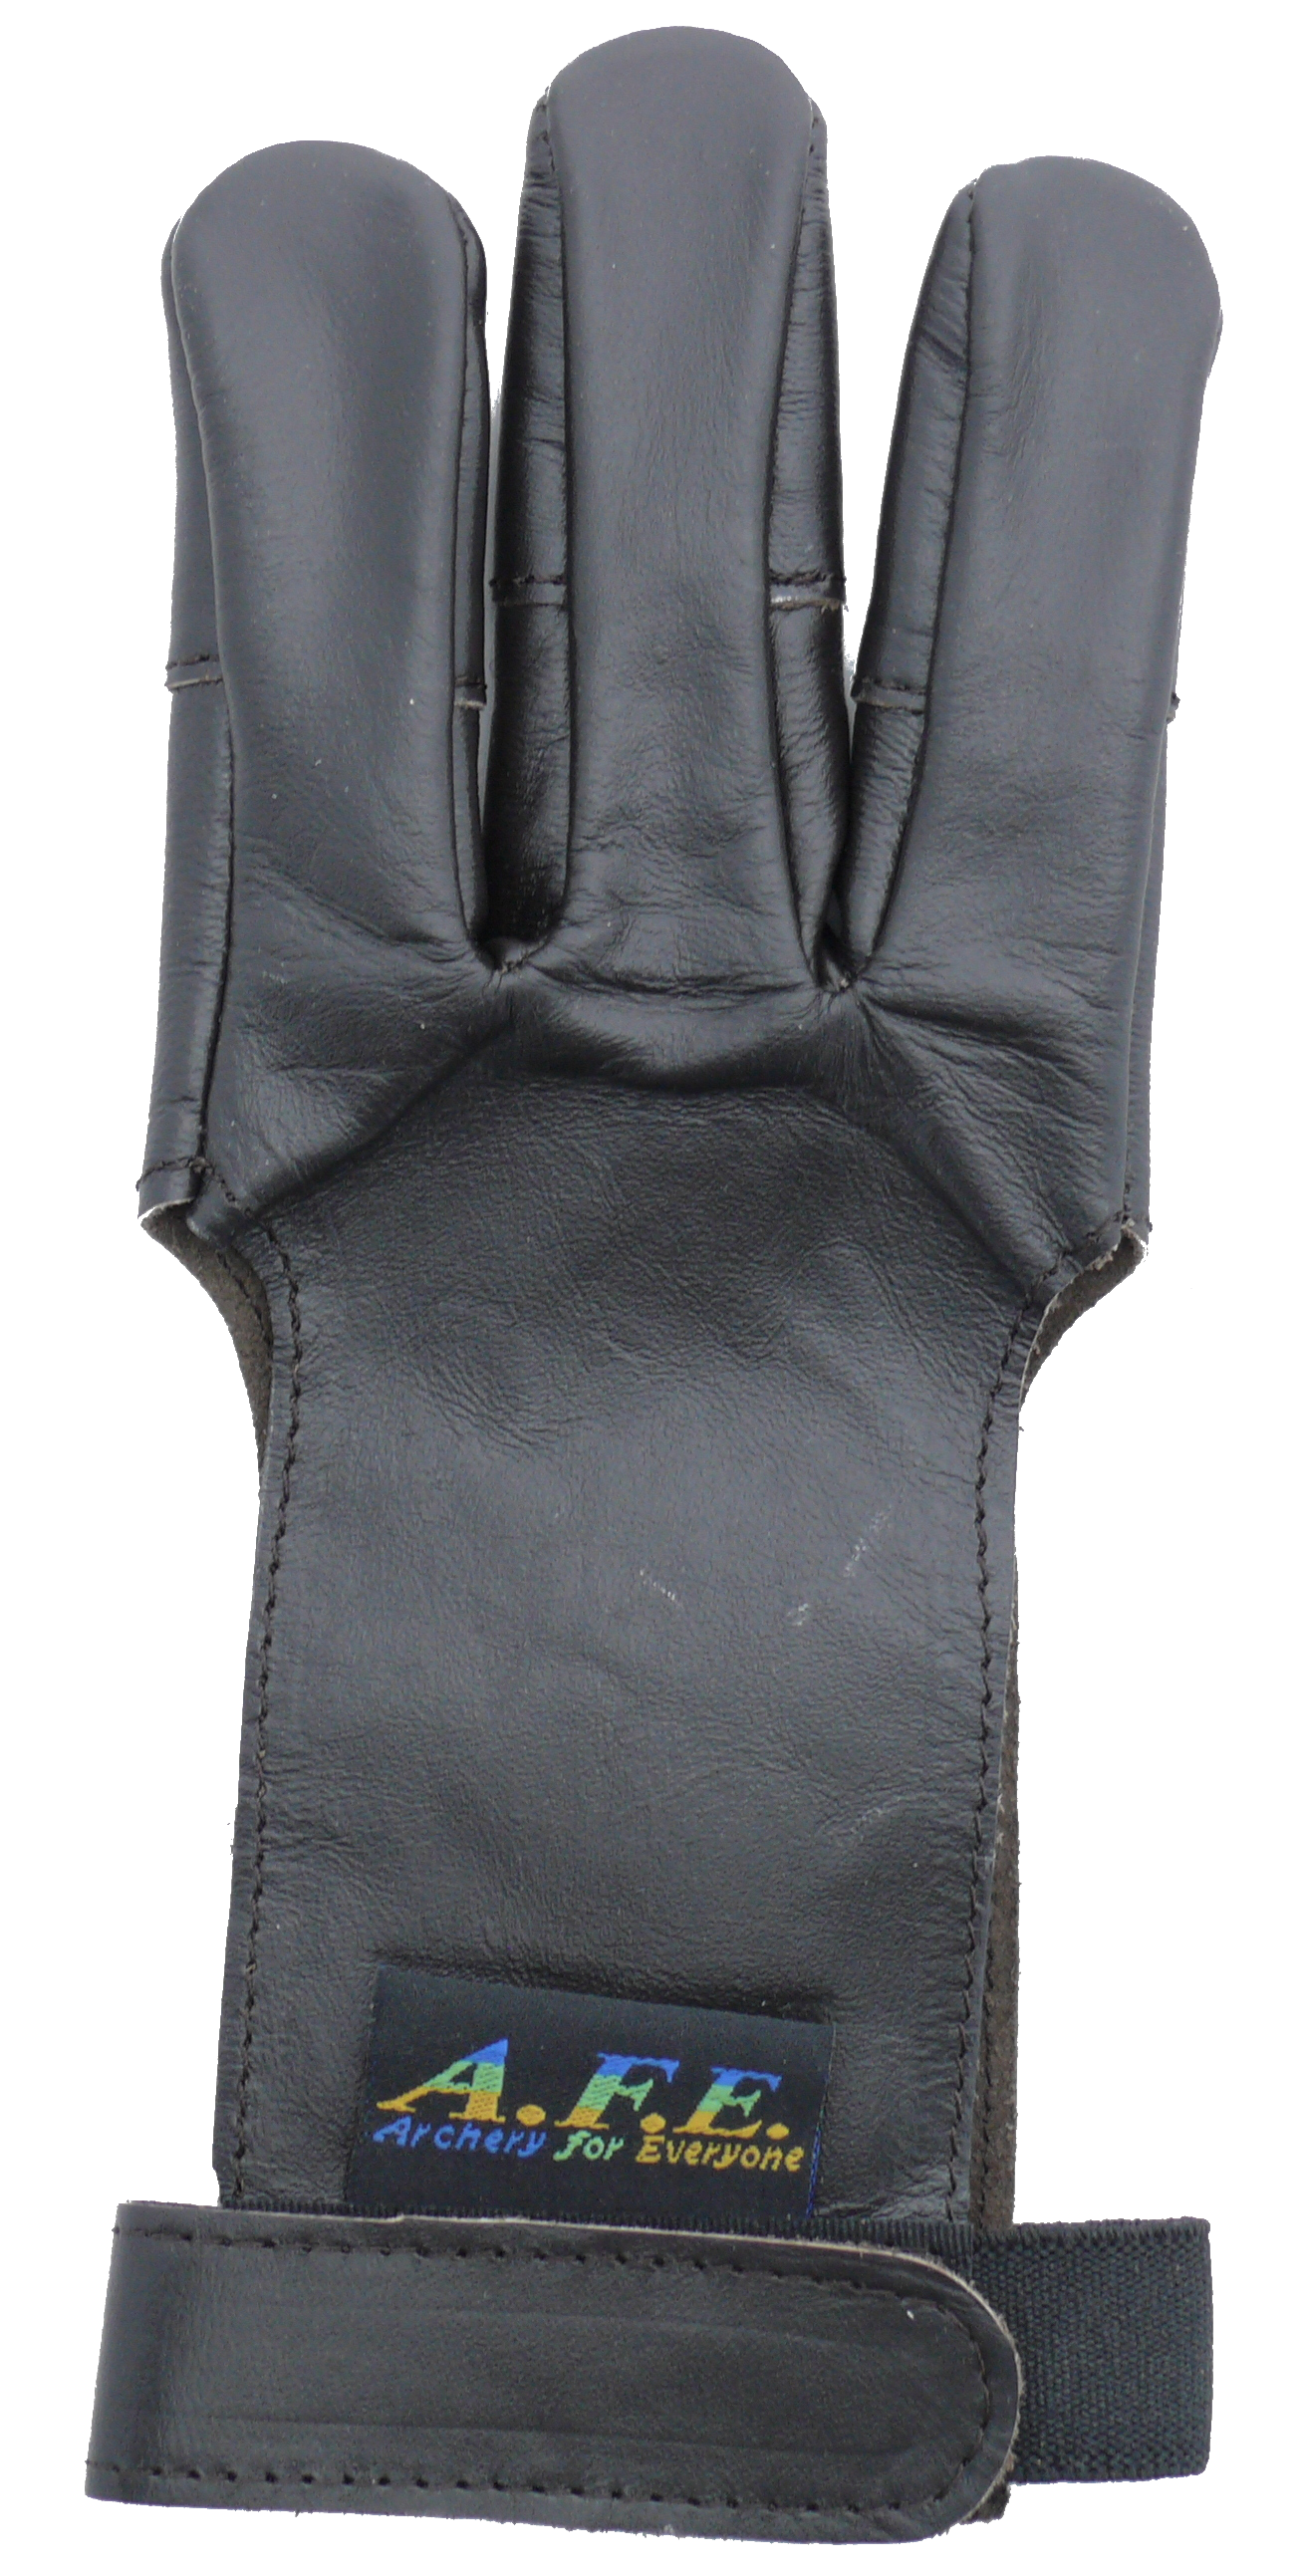  TLE Glove Fullfinger leather dunkelbraun S/M/L/XL LG2 